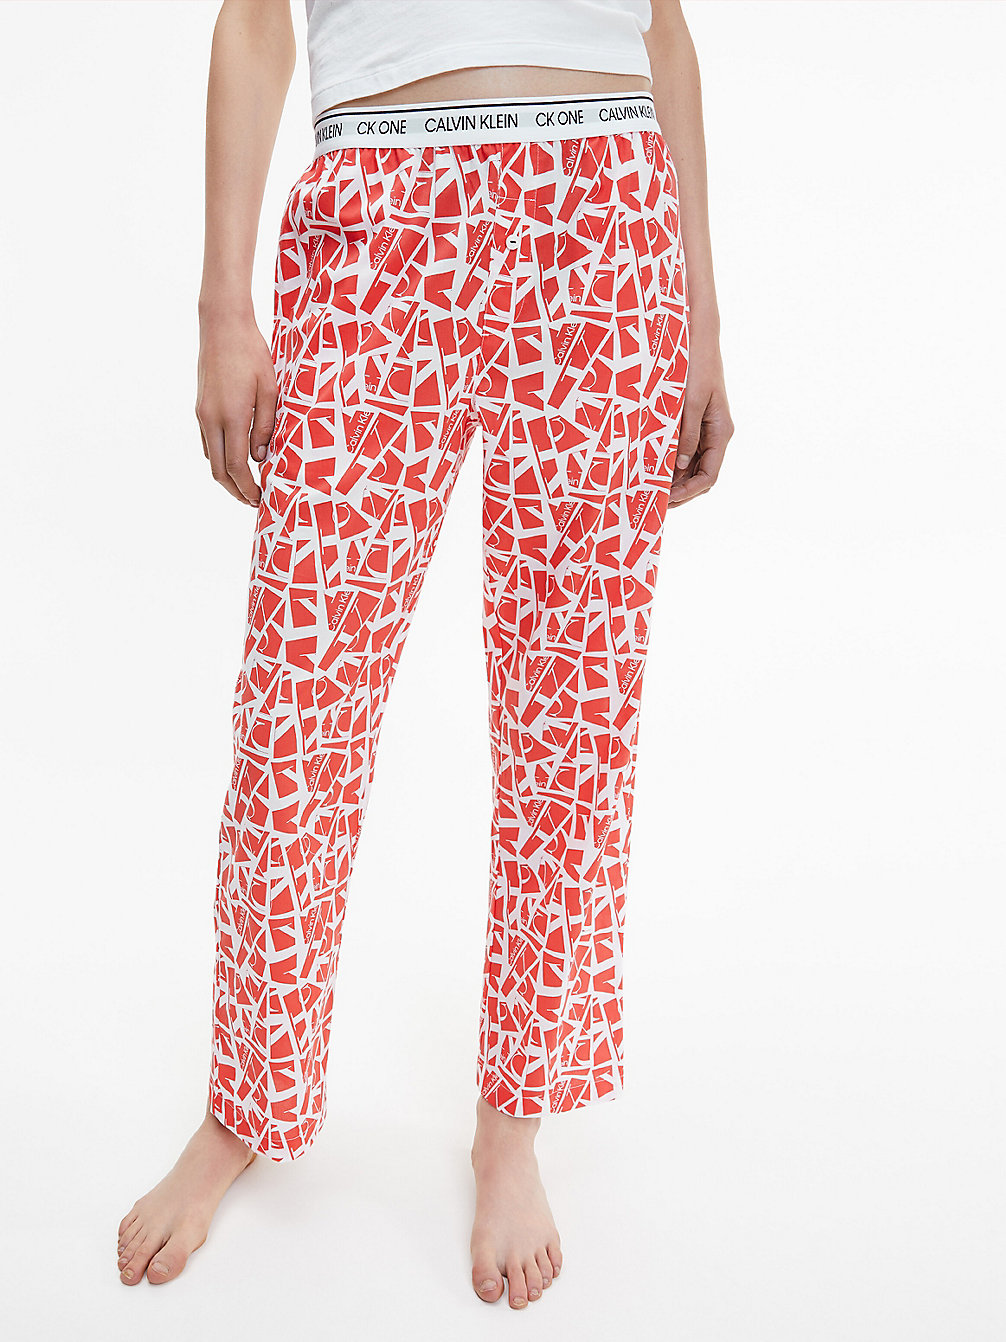 SLICED LOGO PRINT_ORANGE ODYSSEY > Пижамные штаны - CK One > undefined Женщины - Calvin Klein